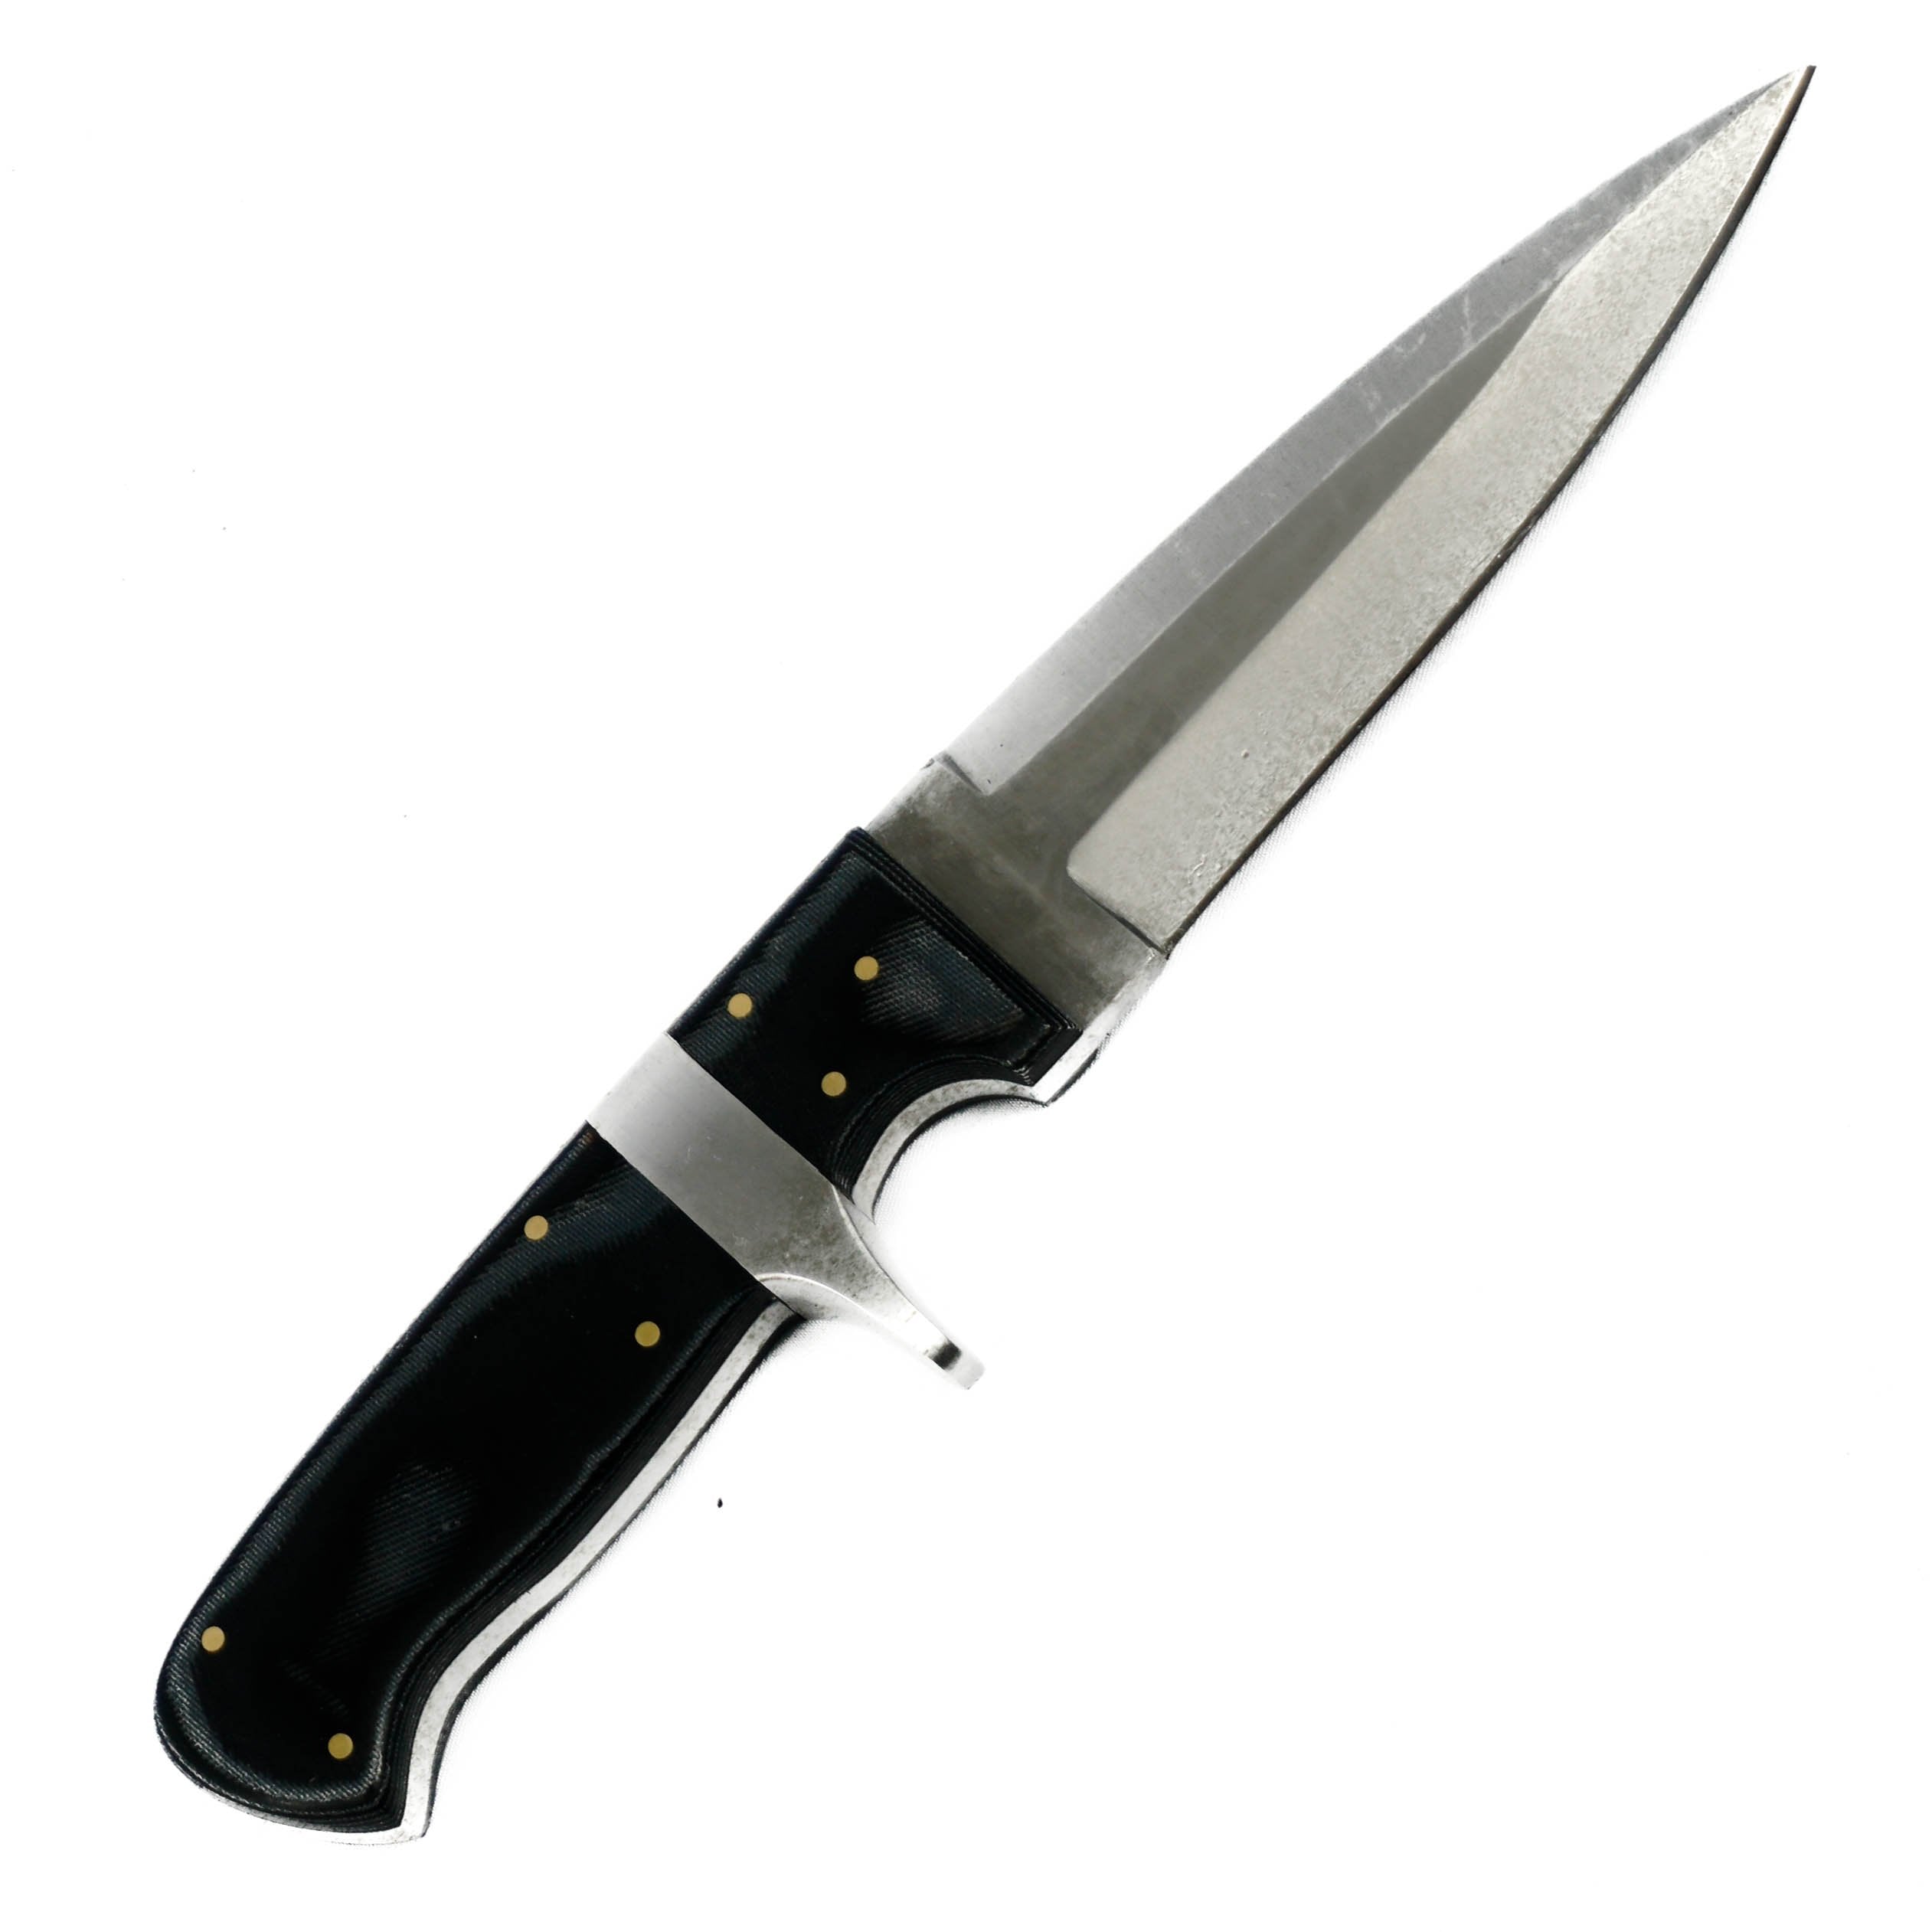 Buy Survival Knives Online by Battling Blades